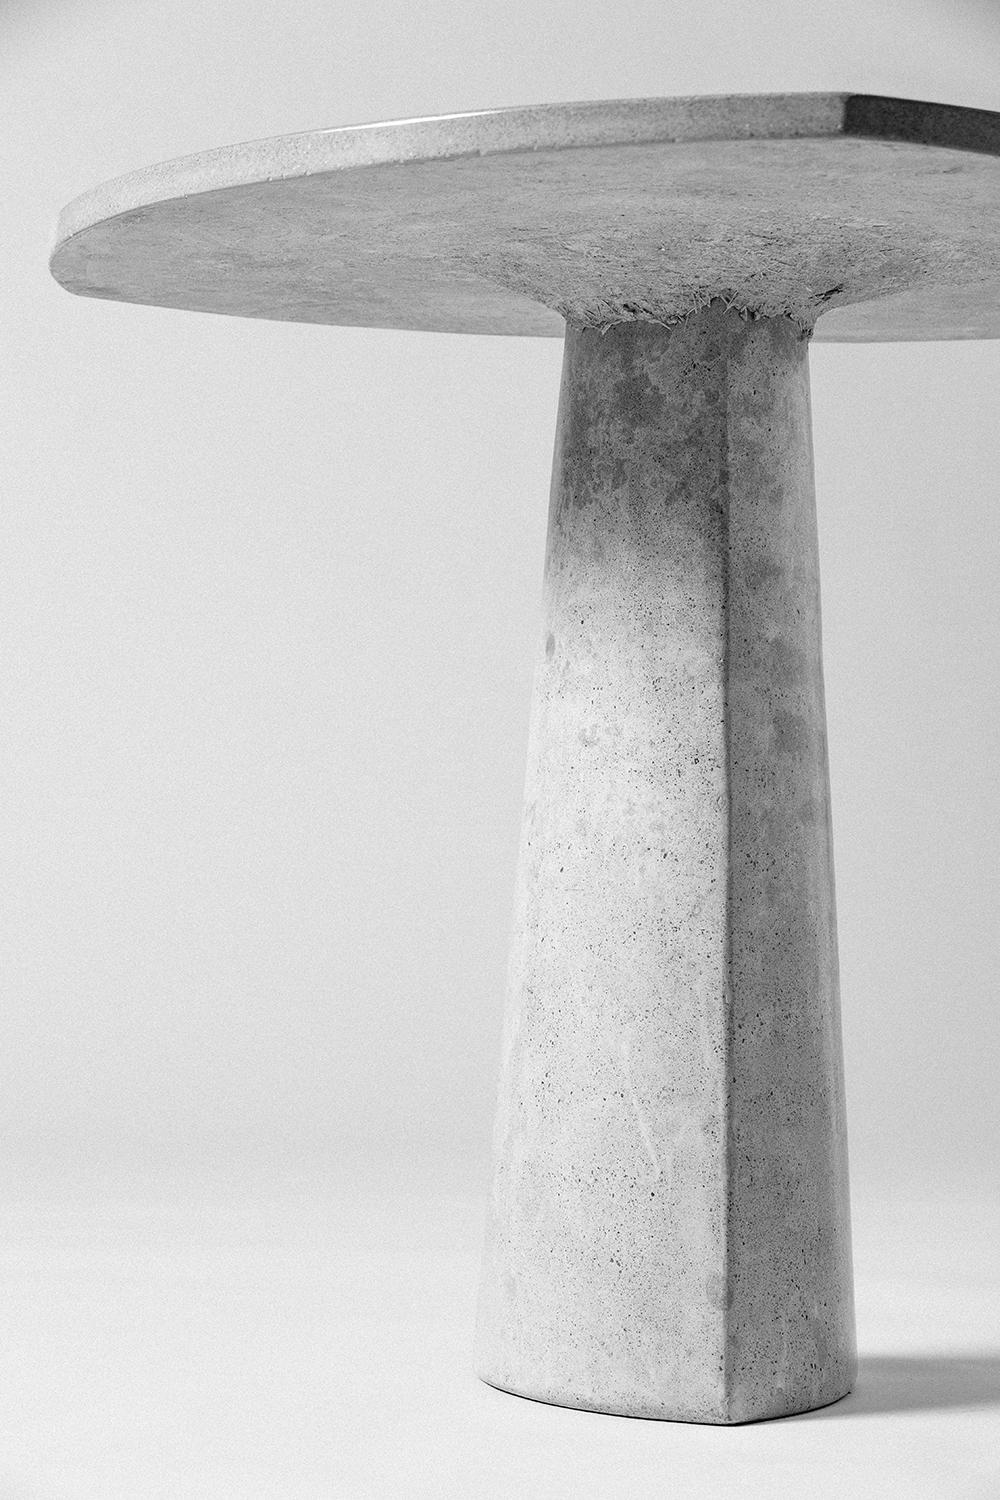 American James de Wulf Concrete Clover Table For Sale